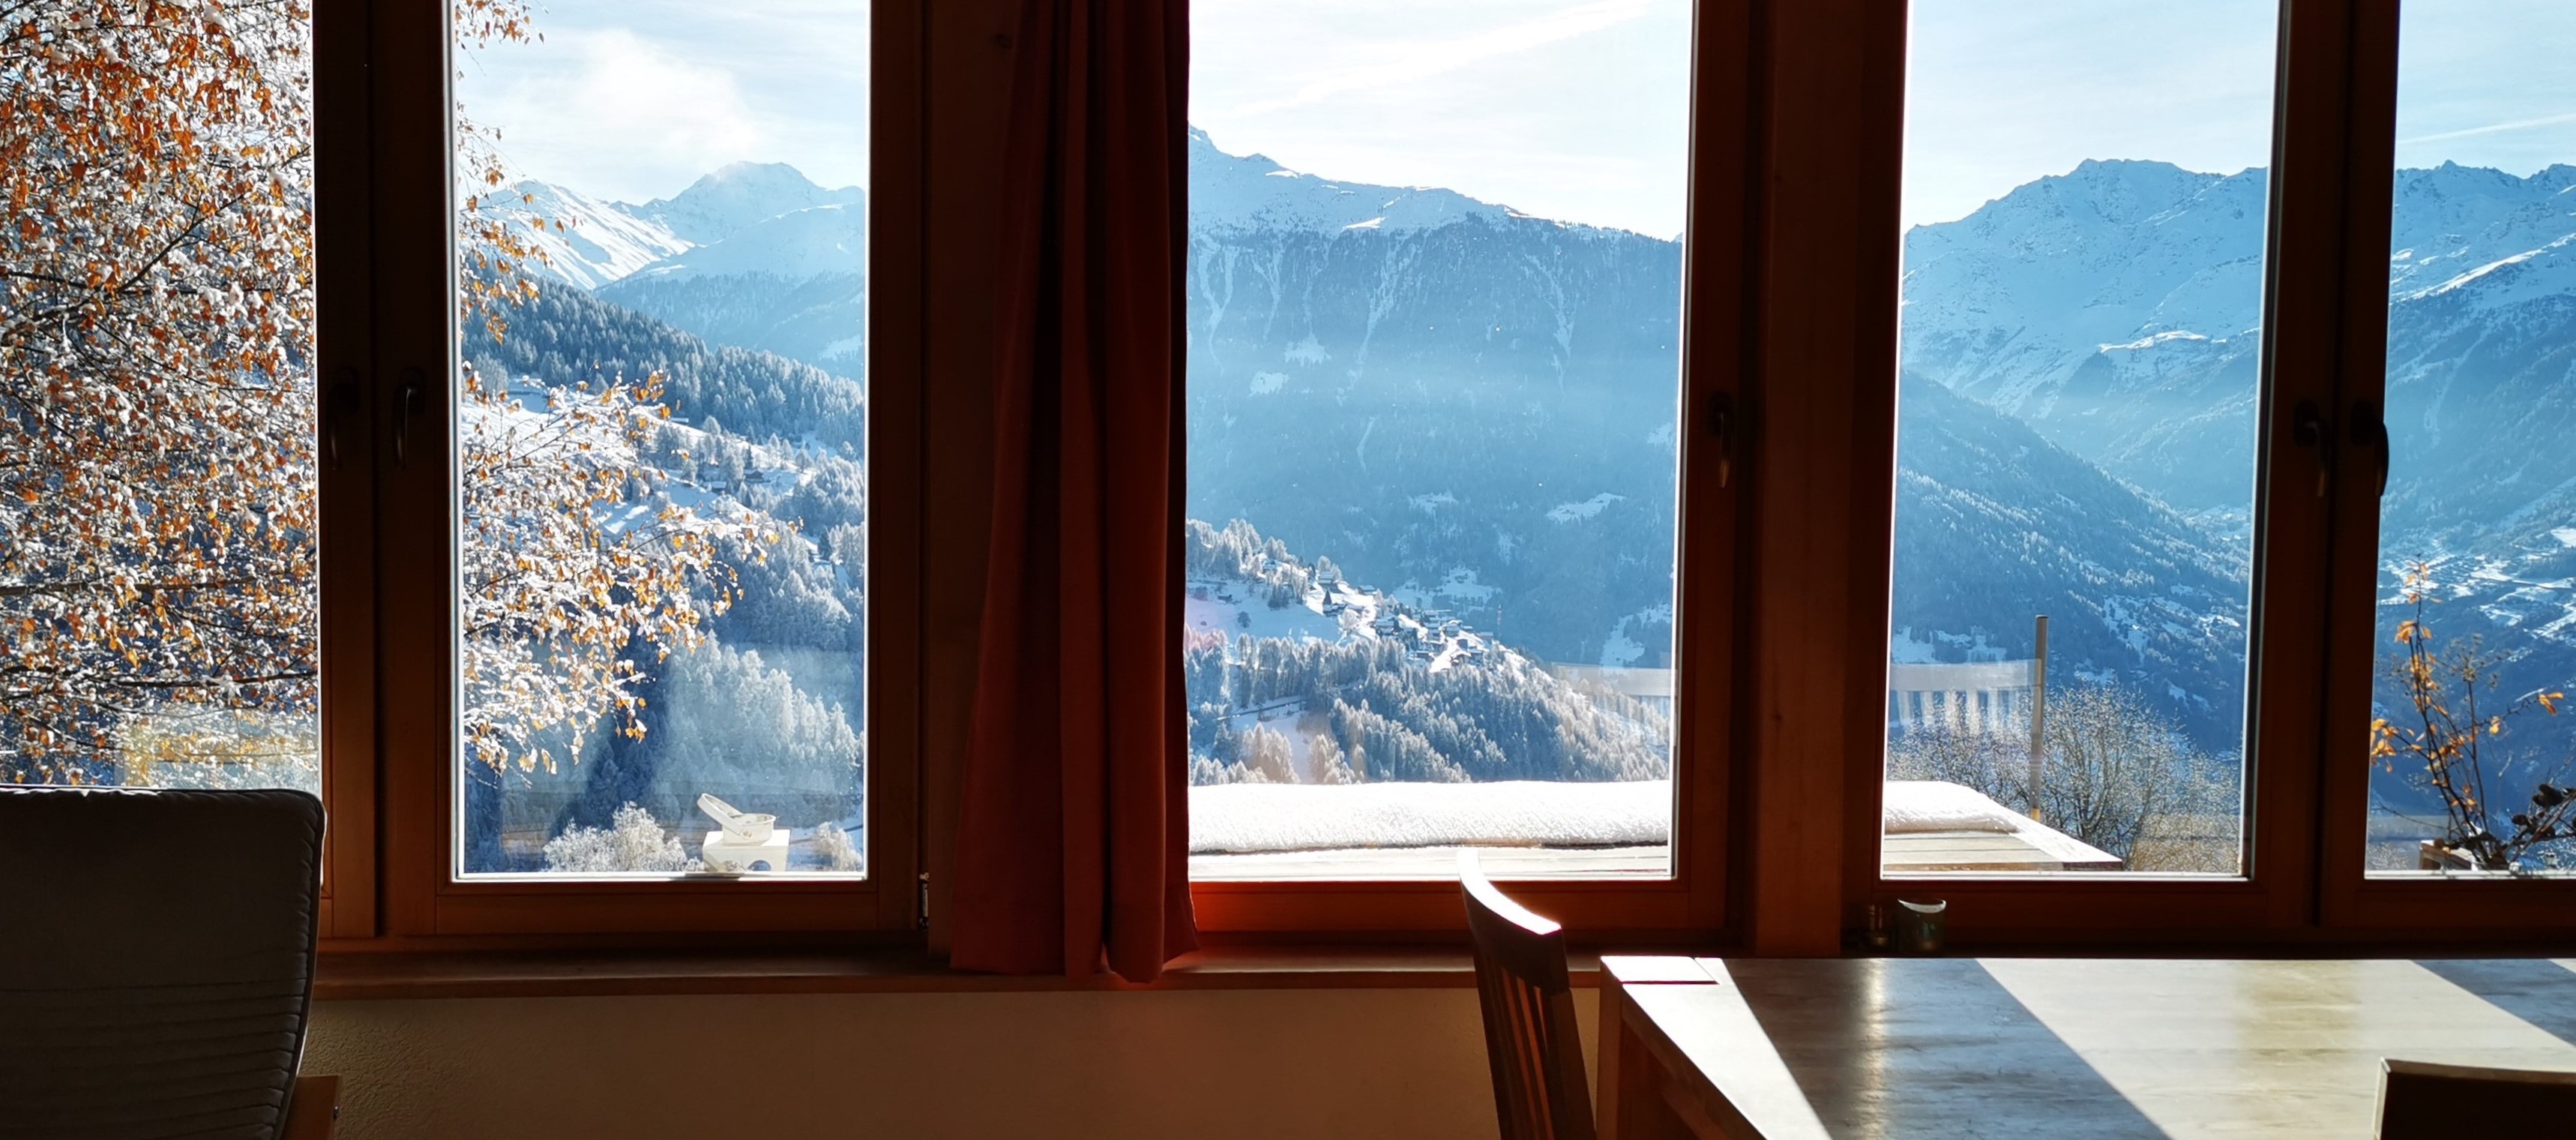 Ferienhaus Schweiz / Chalets im Val d´Hèrens im Wallis